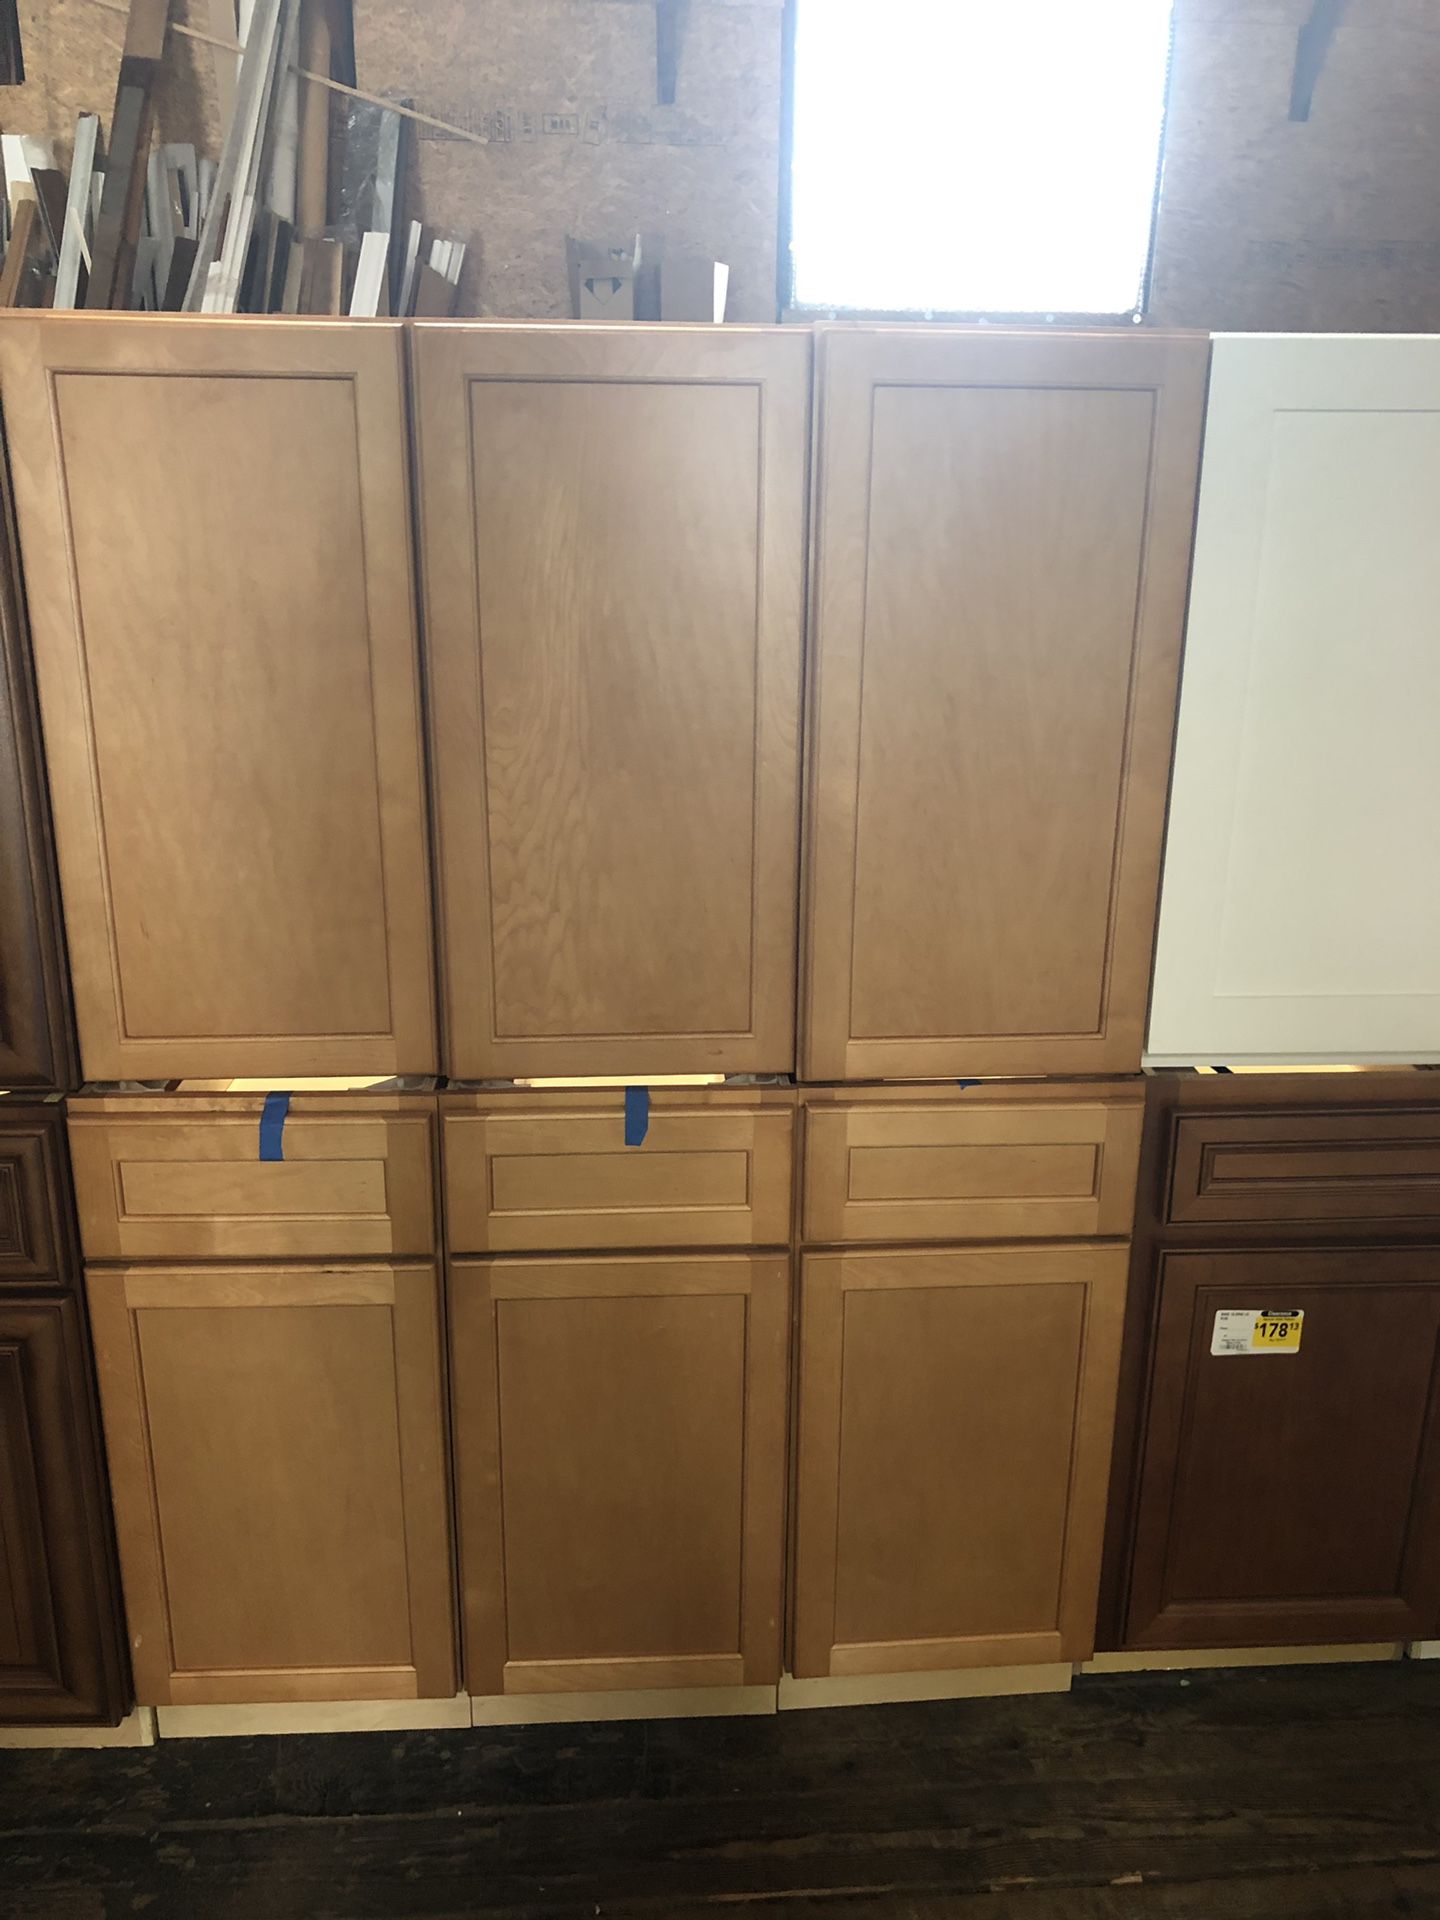 New wood kitchen cabinets